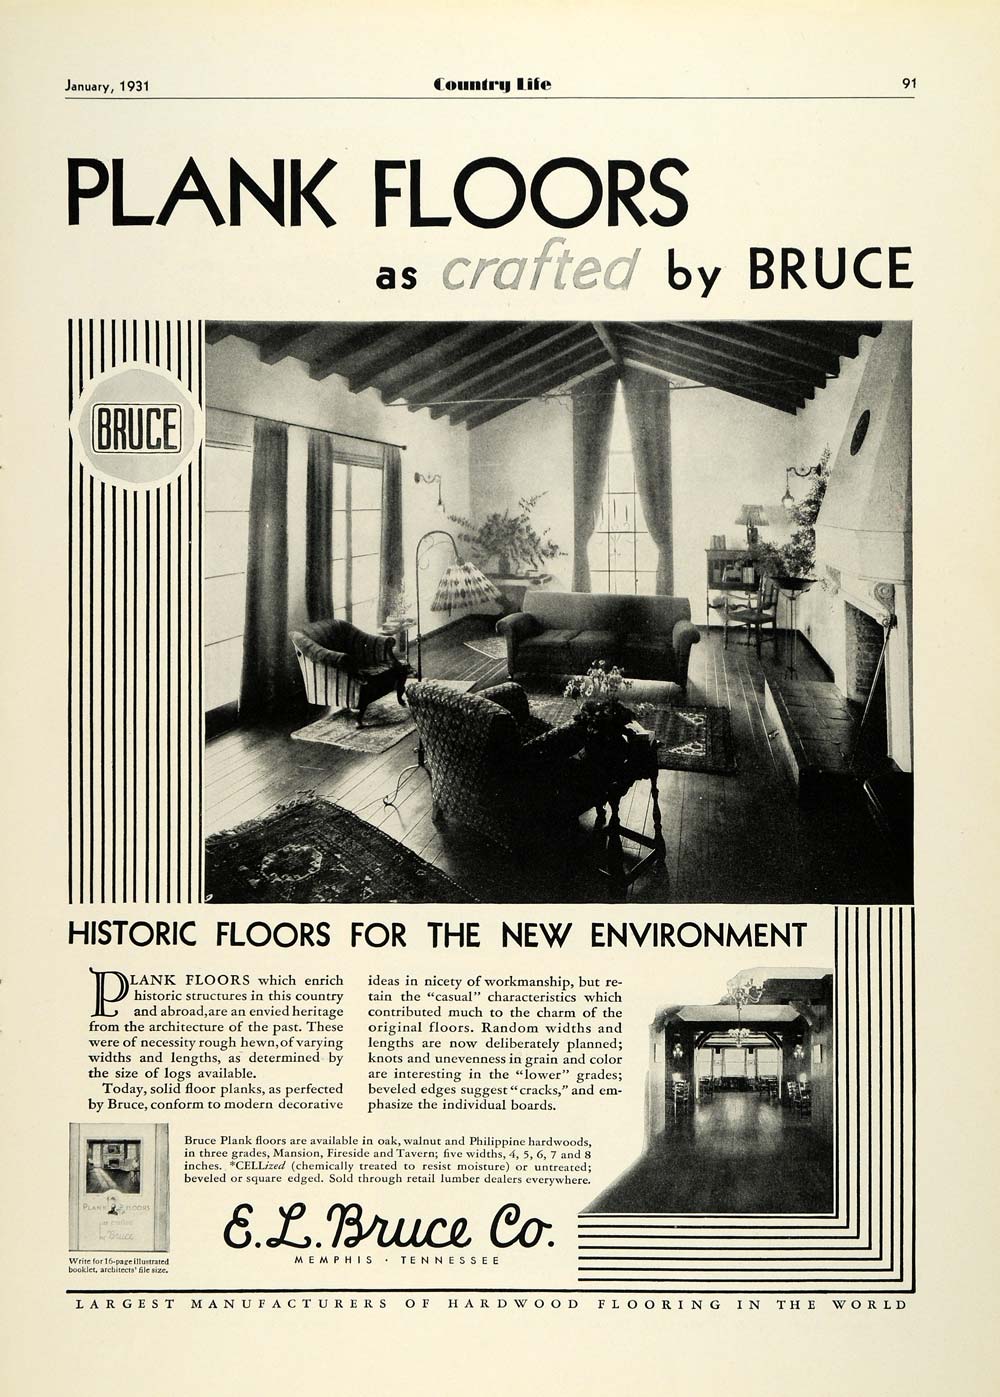 1931 Ad E L Bruce Co Plank Floor Cellized Oak Walnut Living Room Interior COL2